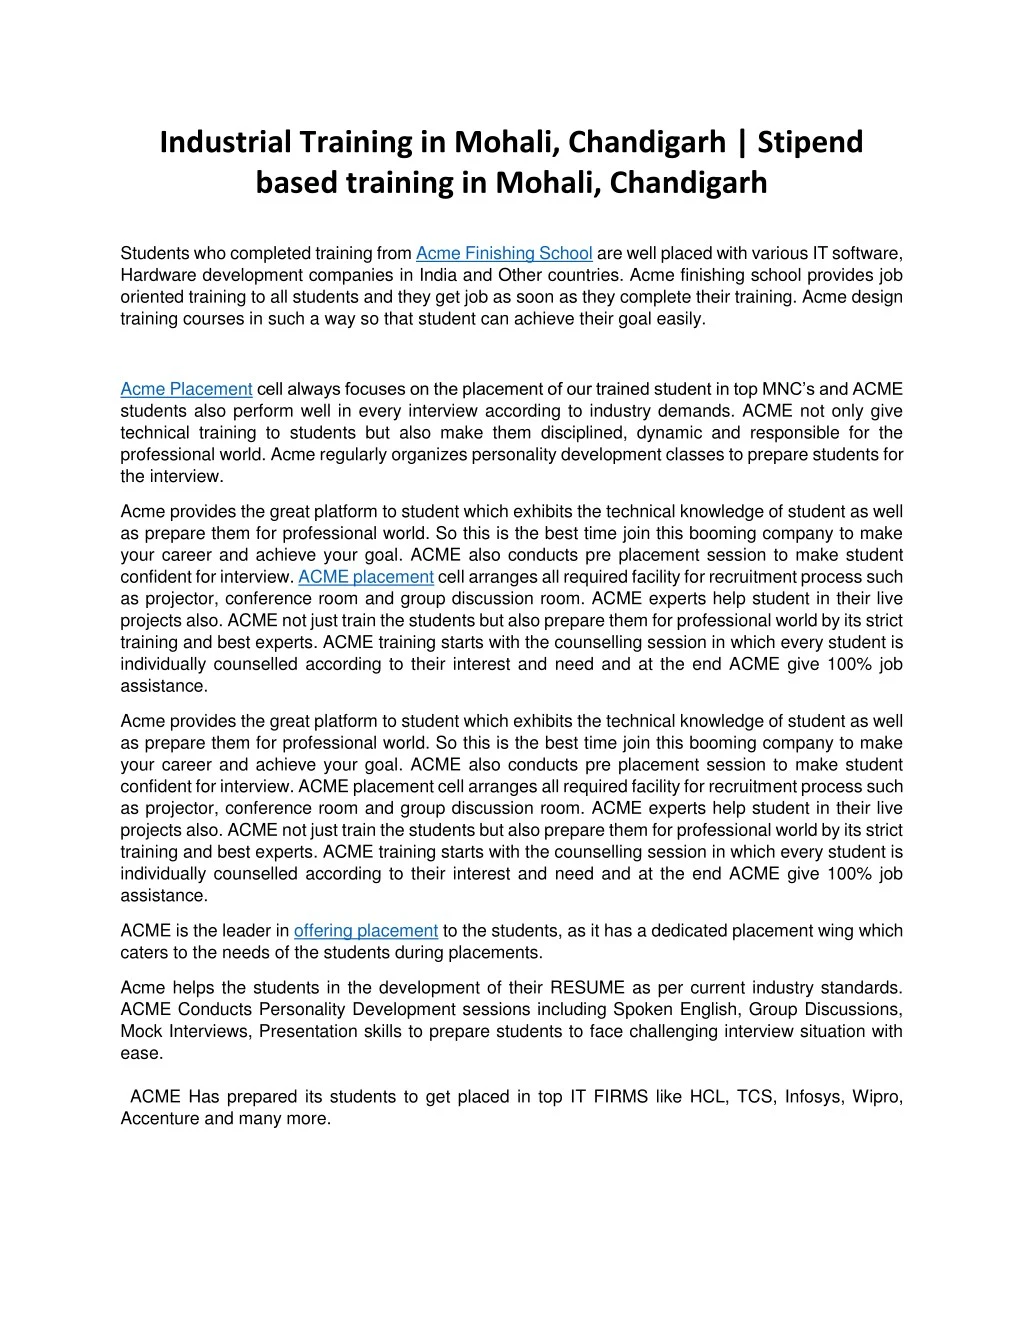 industrial training in mohali chandigarh stipend